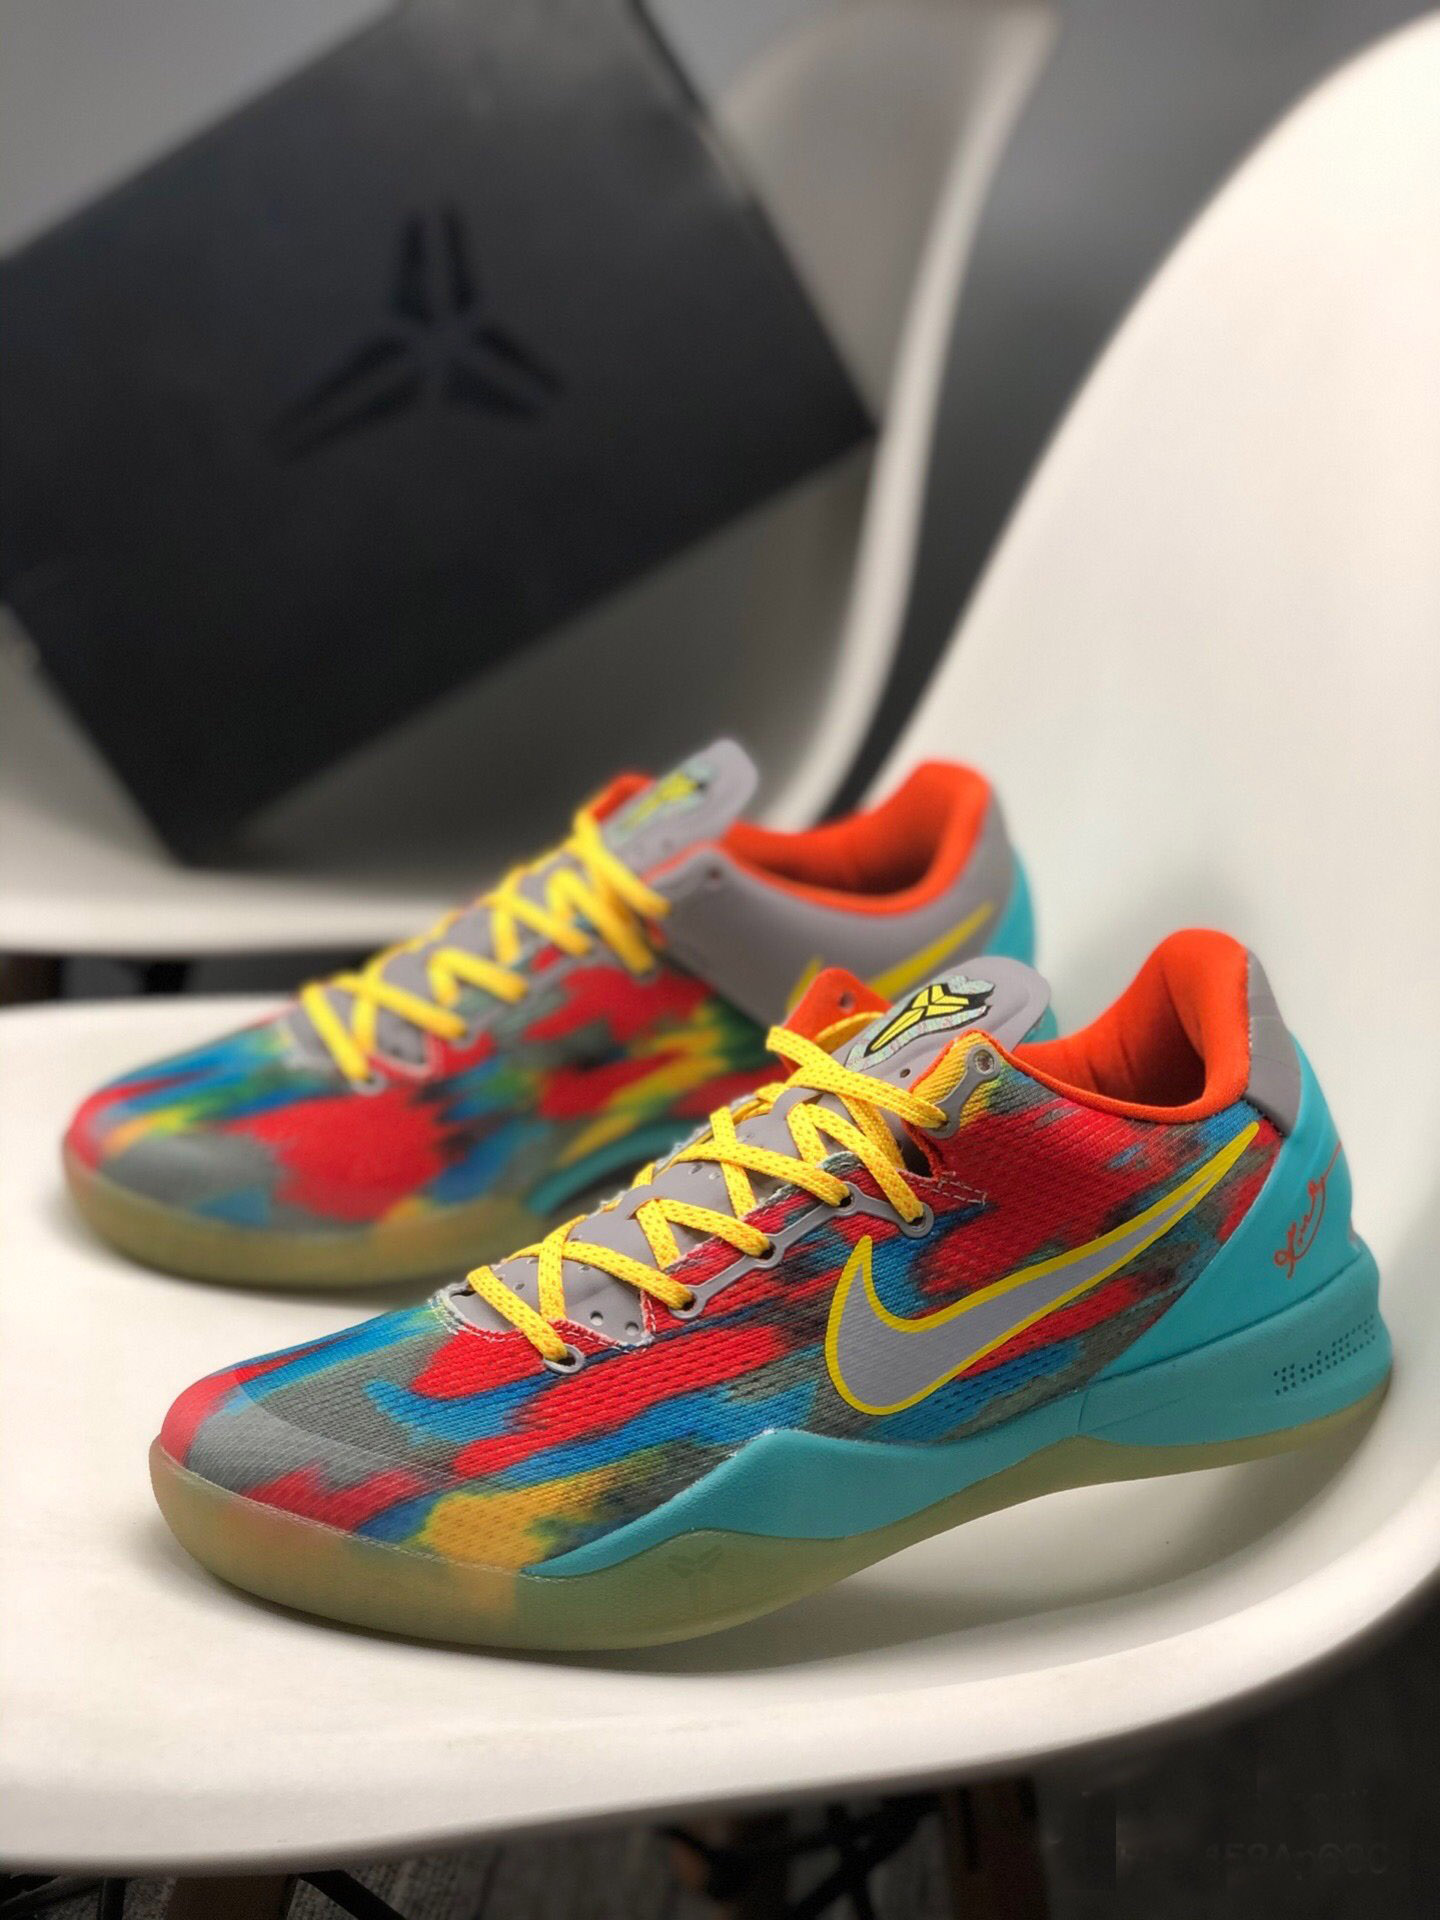 Nike Kobe 8 Venice Beach - Arriving at Retailers - SneakerNews.com